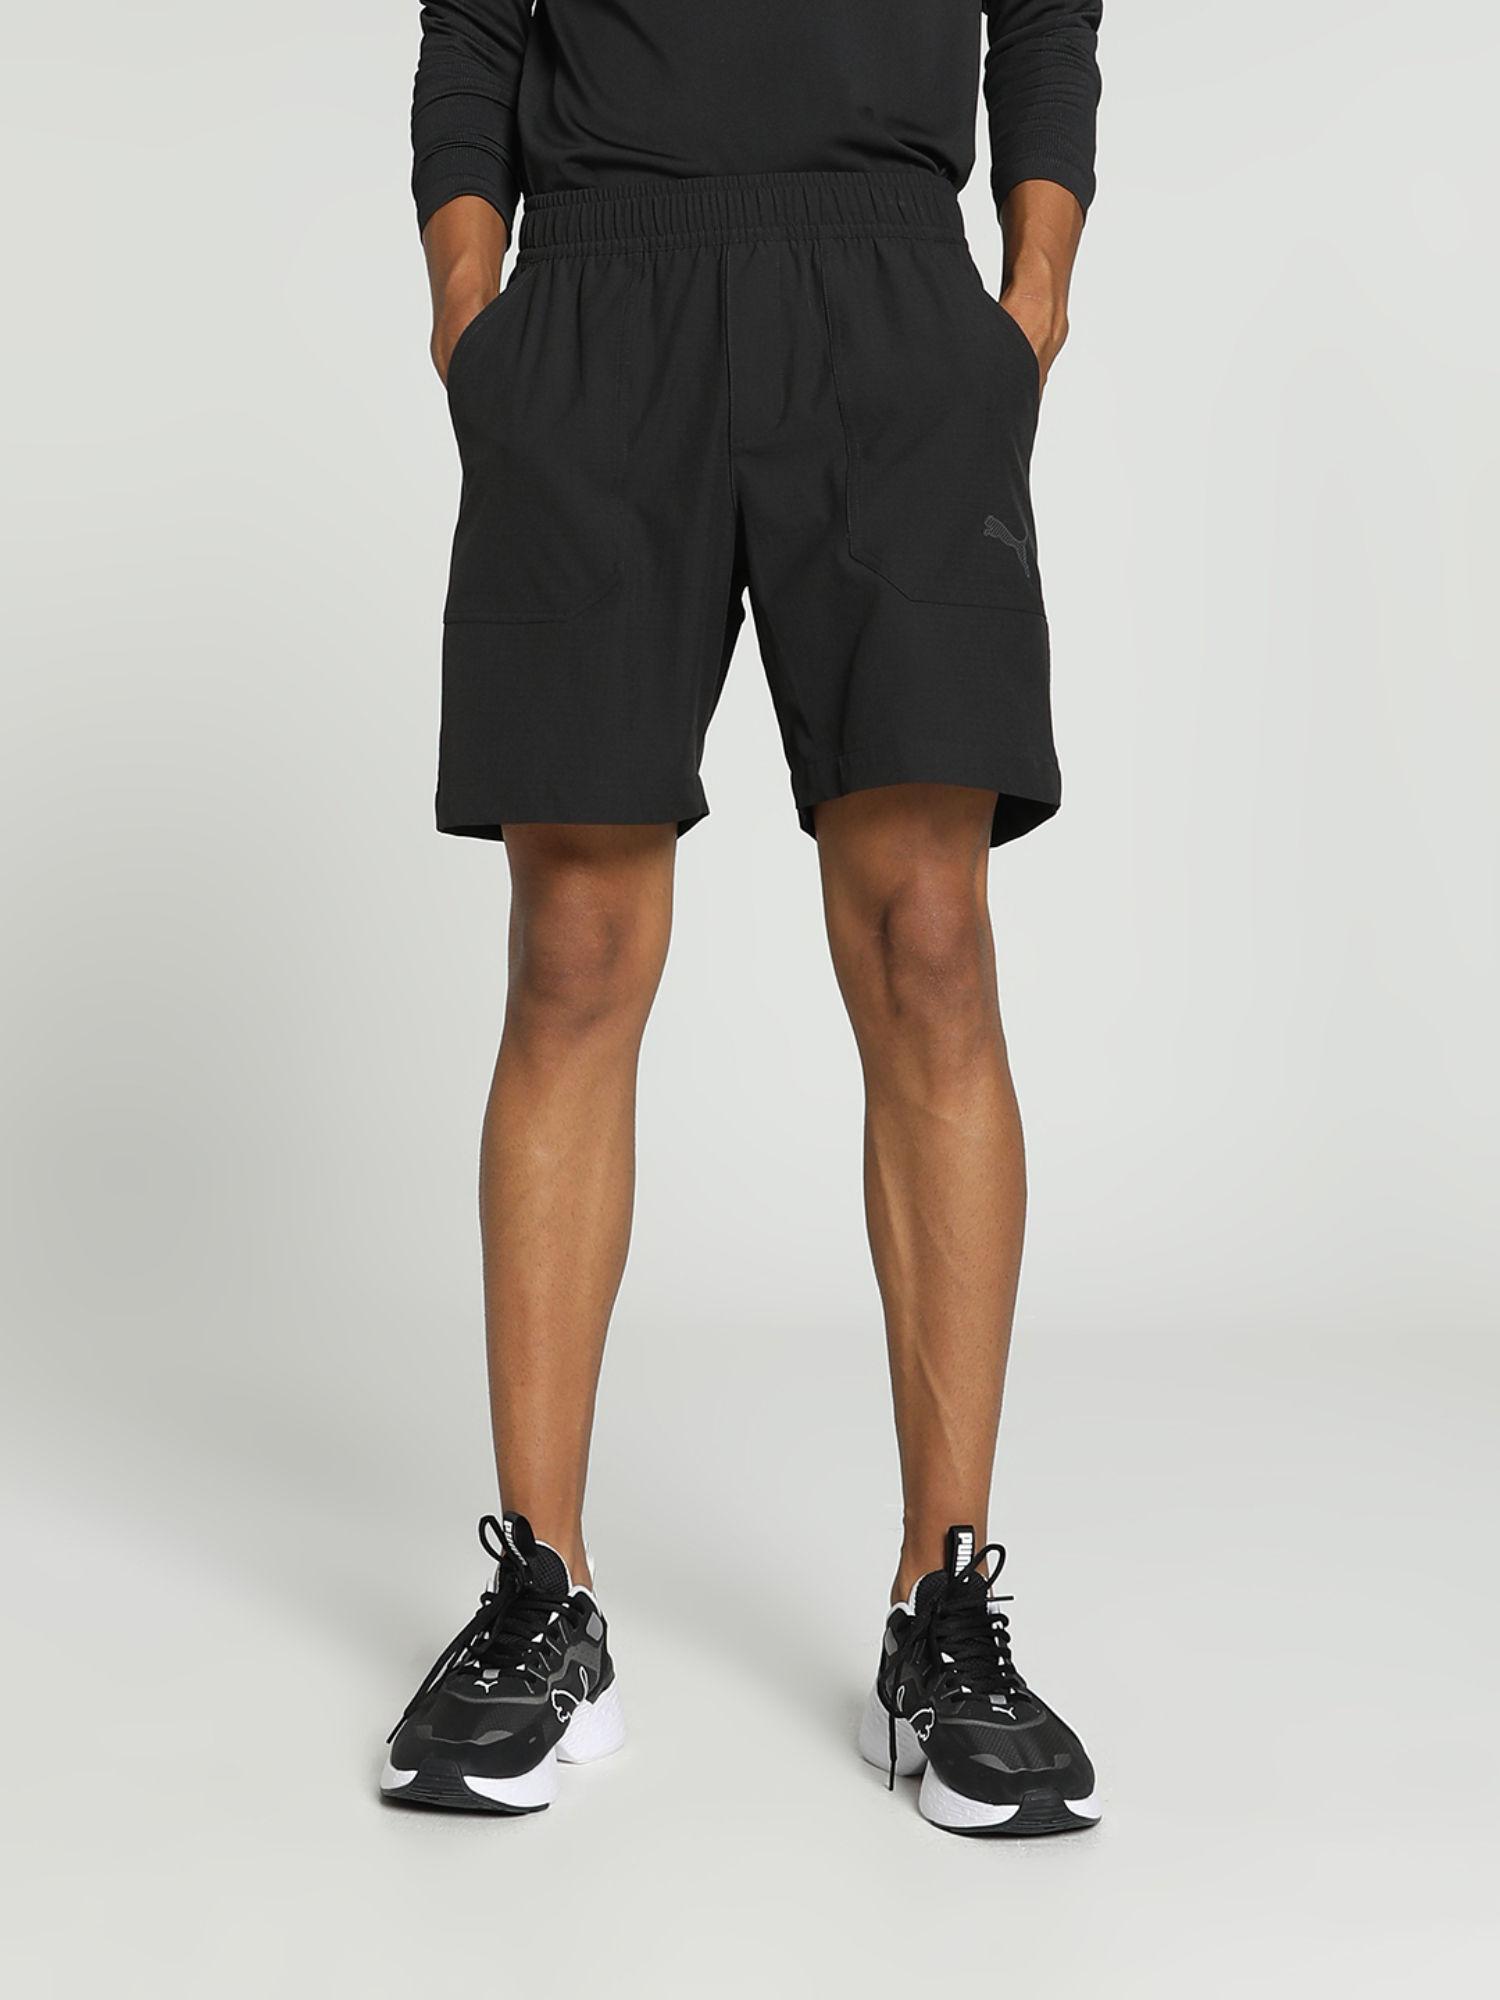 concept 8 woven mens black shorts